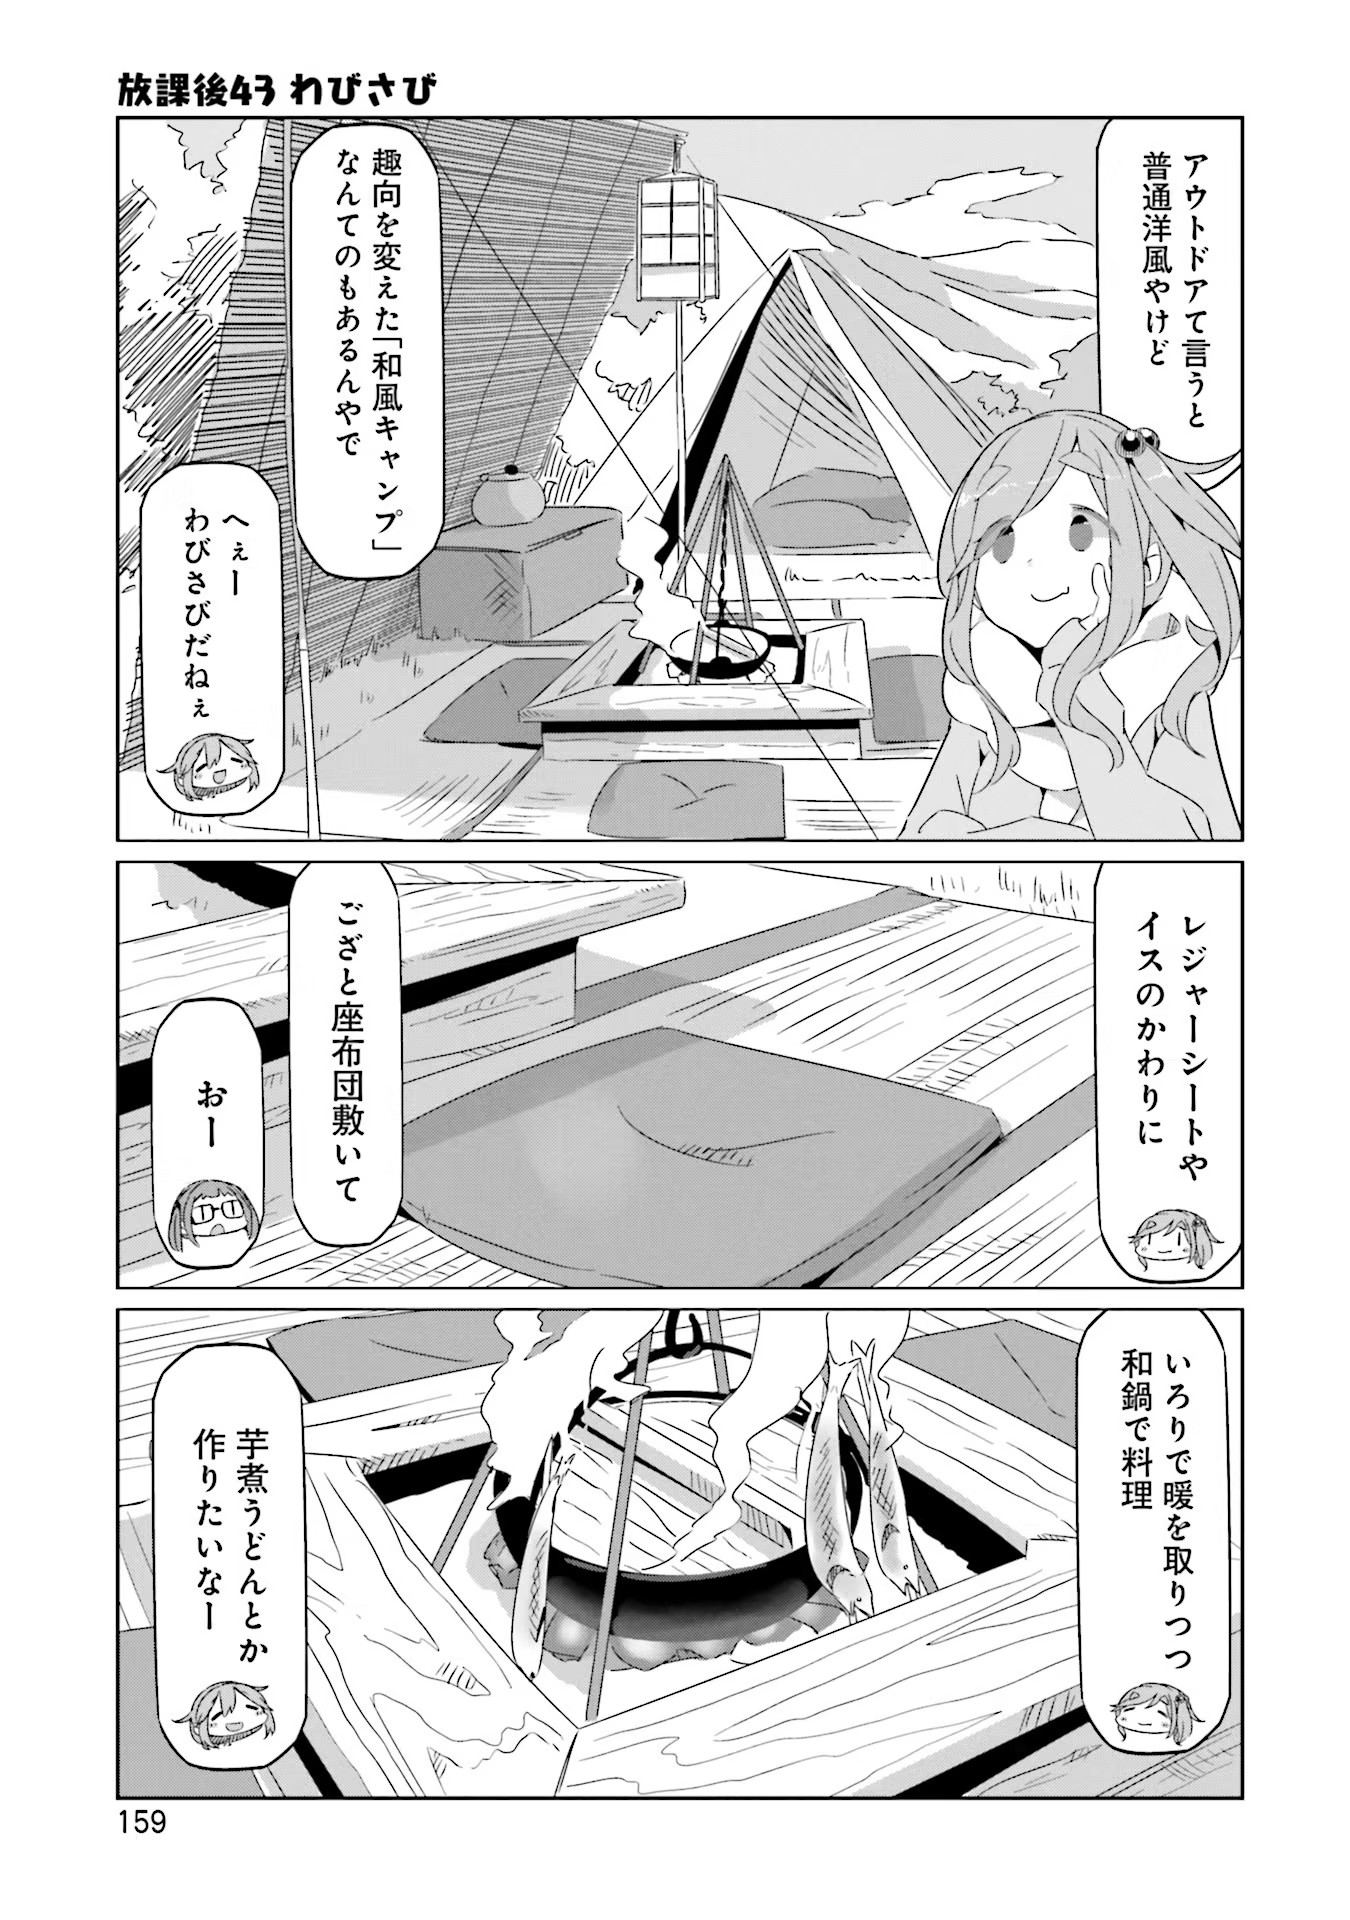 Yuru Camp - Chapter 34.5 - Page 1